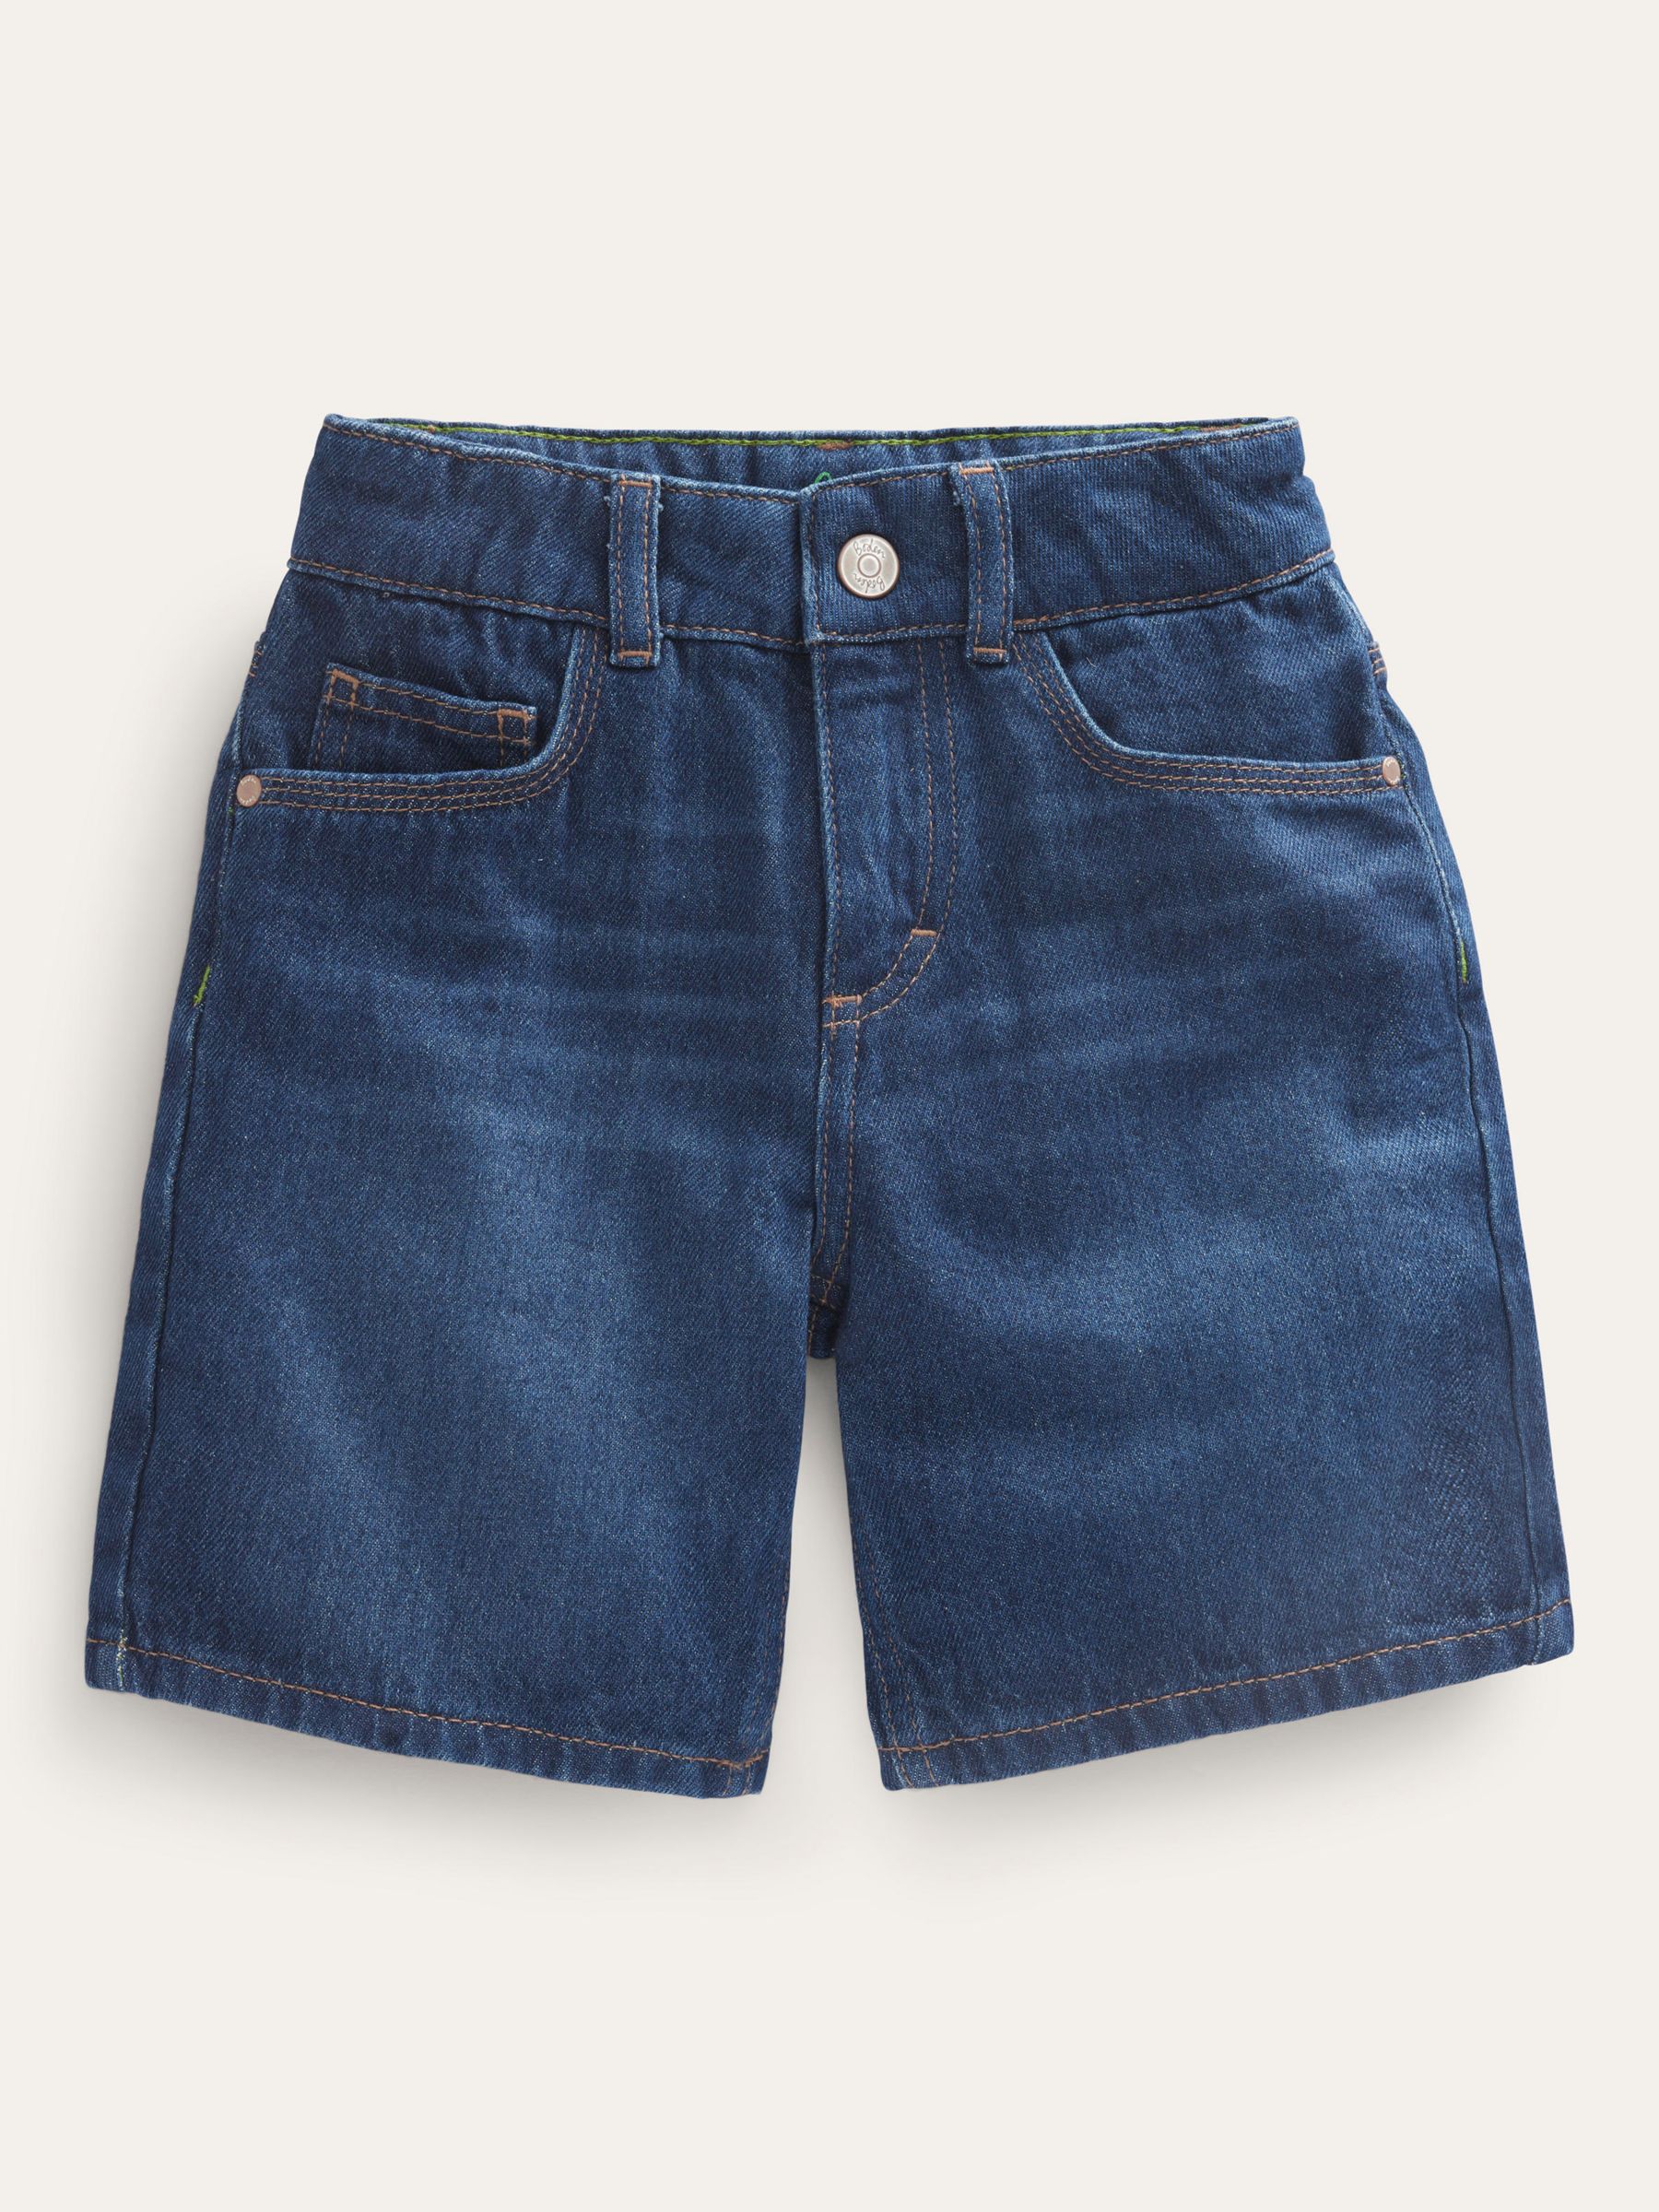 Mini Boden Boy's Relaxed Fit Denim Shorts, Dark Vintage at John Lewis ...